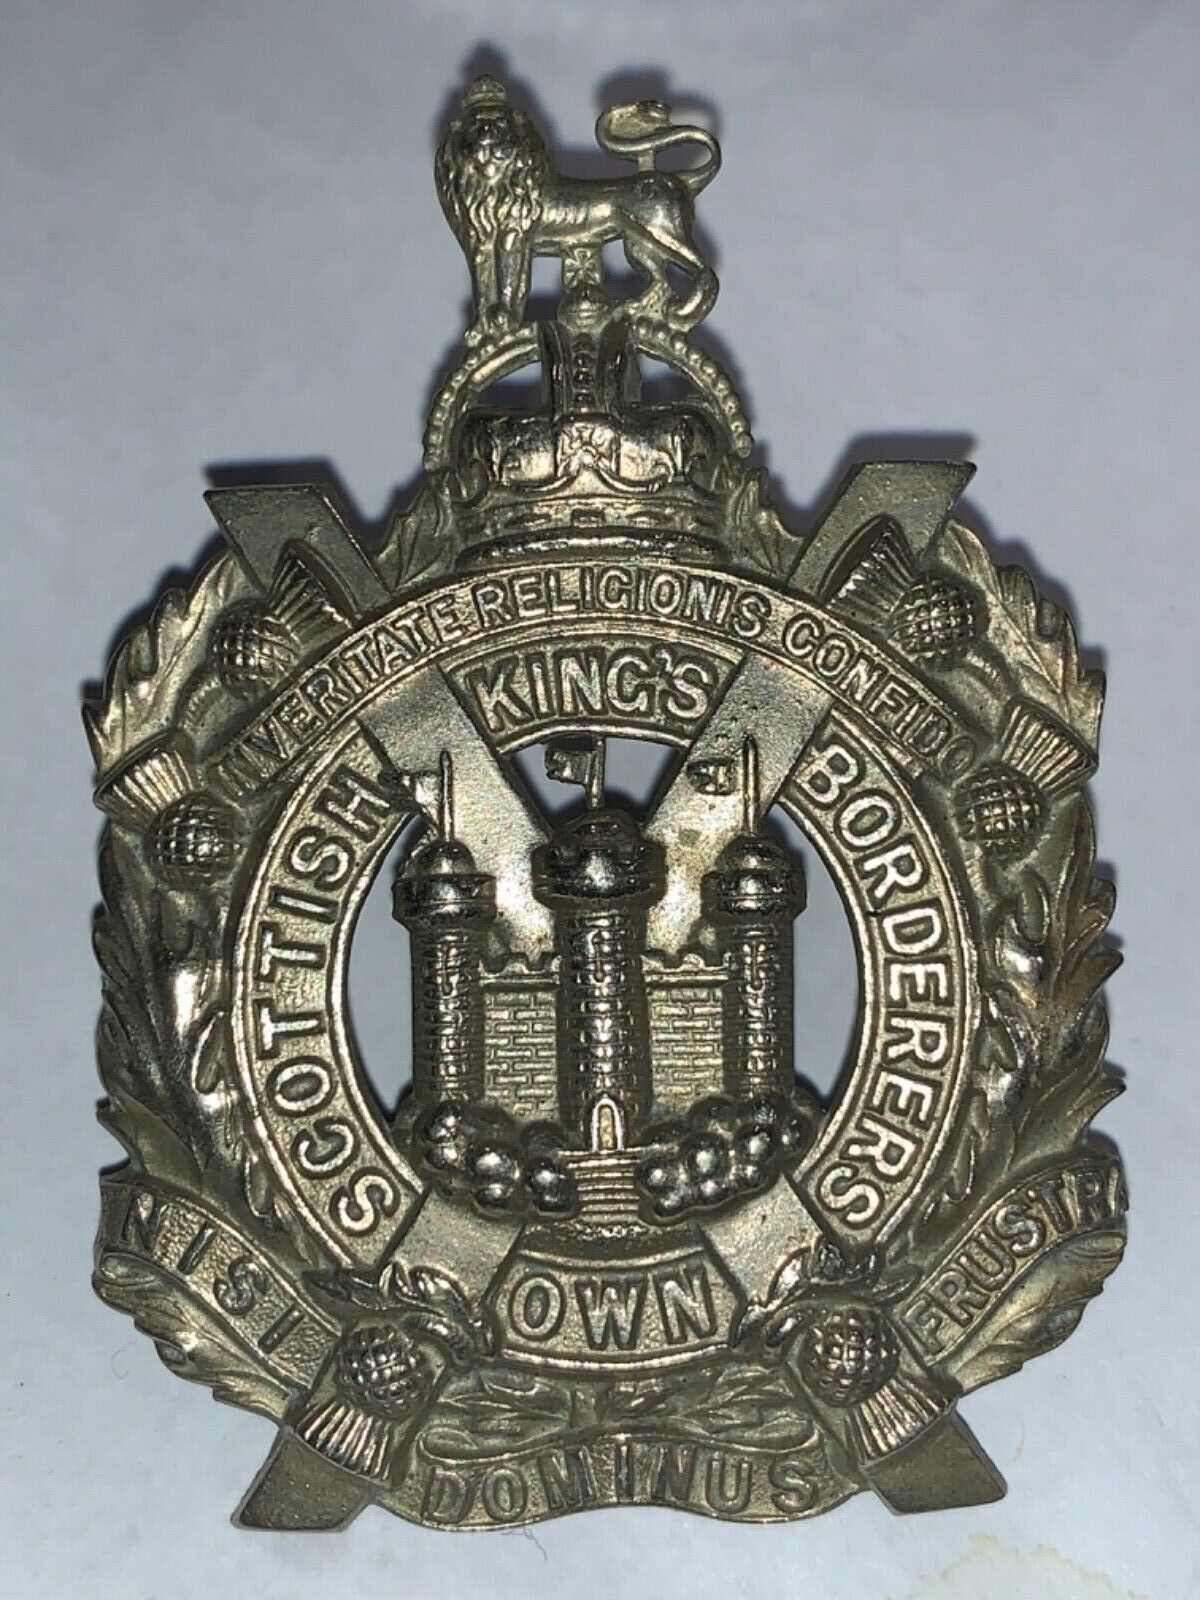 Rare Original Ww1 Kings Own Scottish Borderers Hat Badge Excellent Detail Nice!